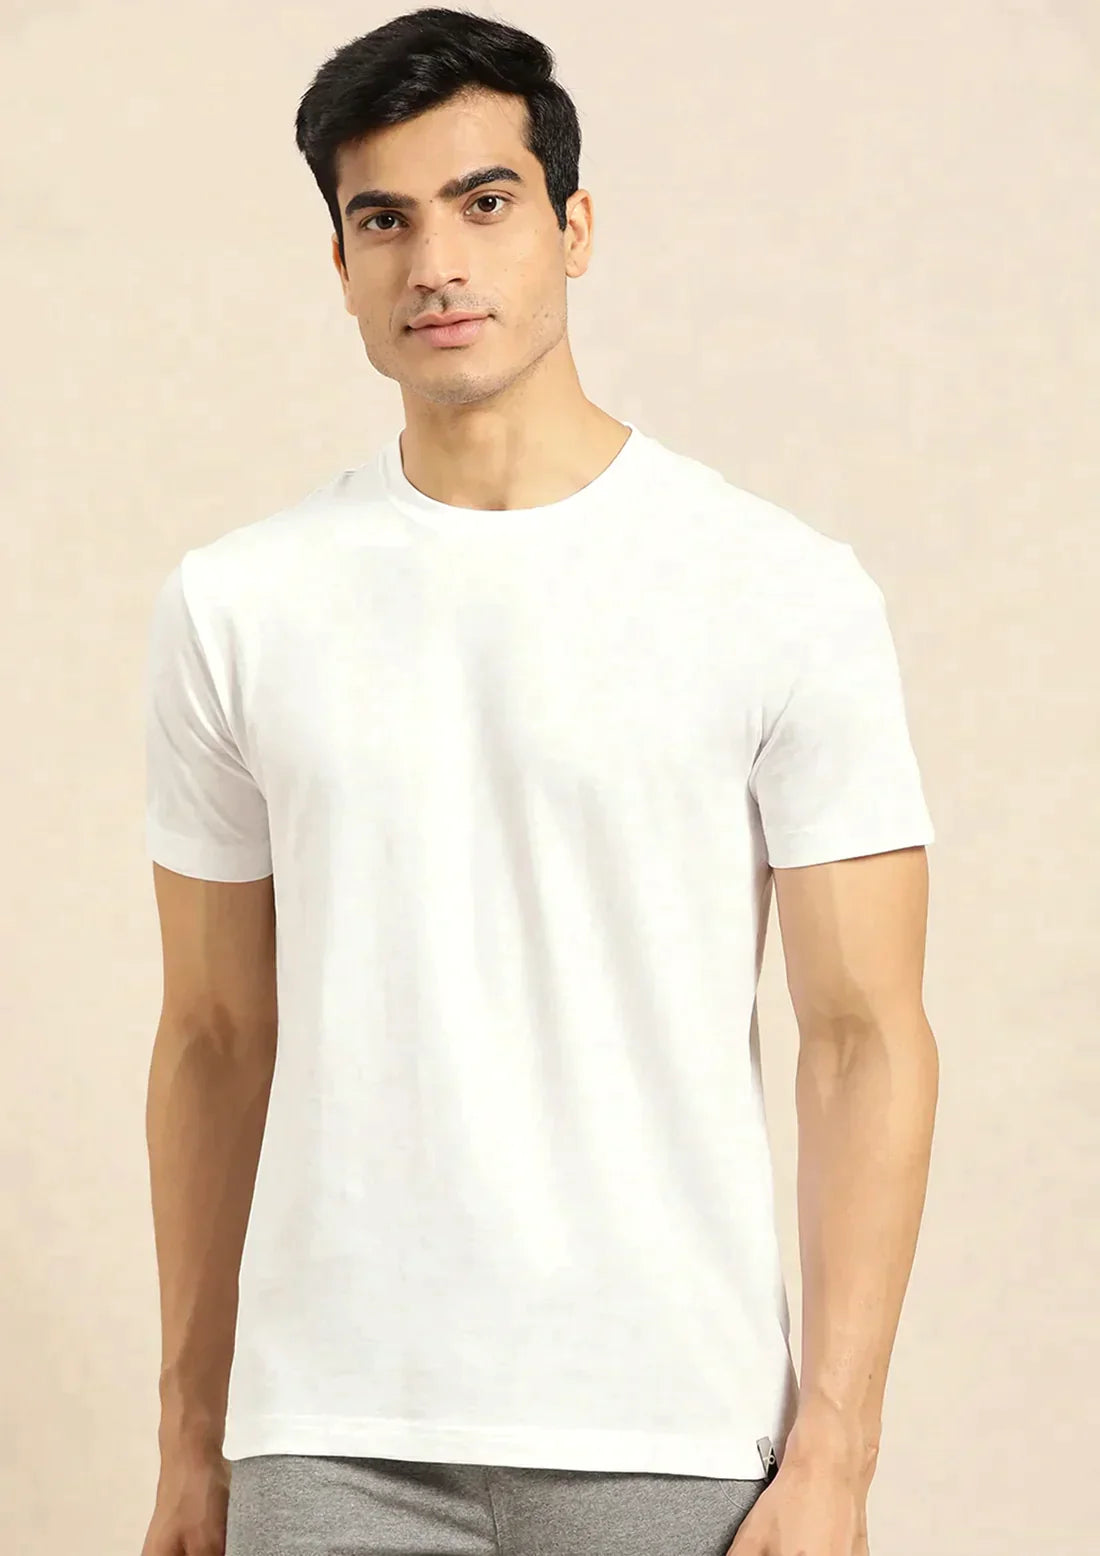 Brown Japenese Design Printed Mens Cotton Half Sleeves Shirts